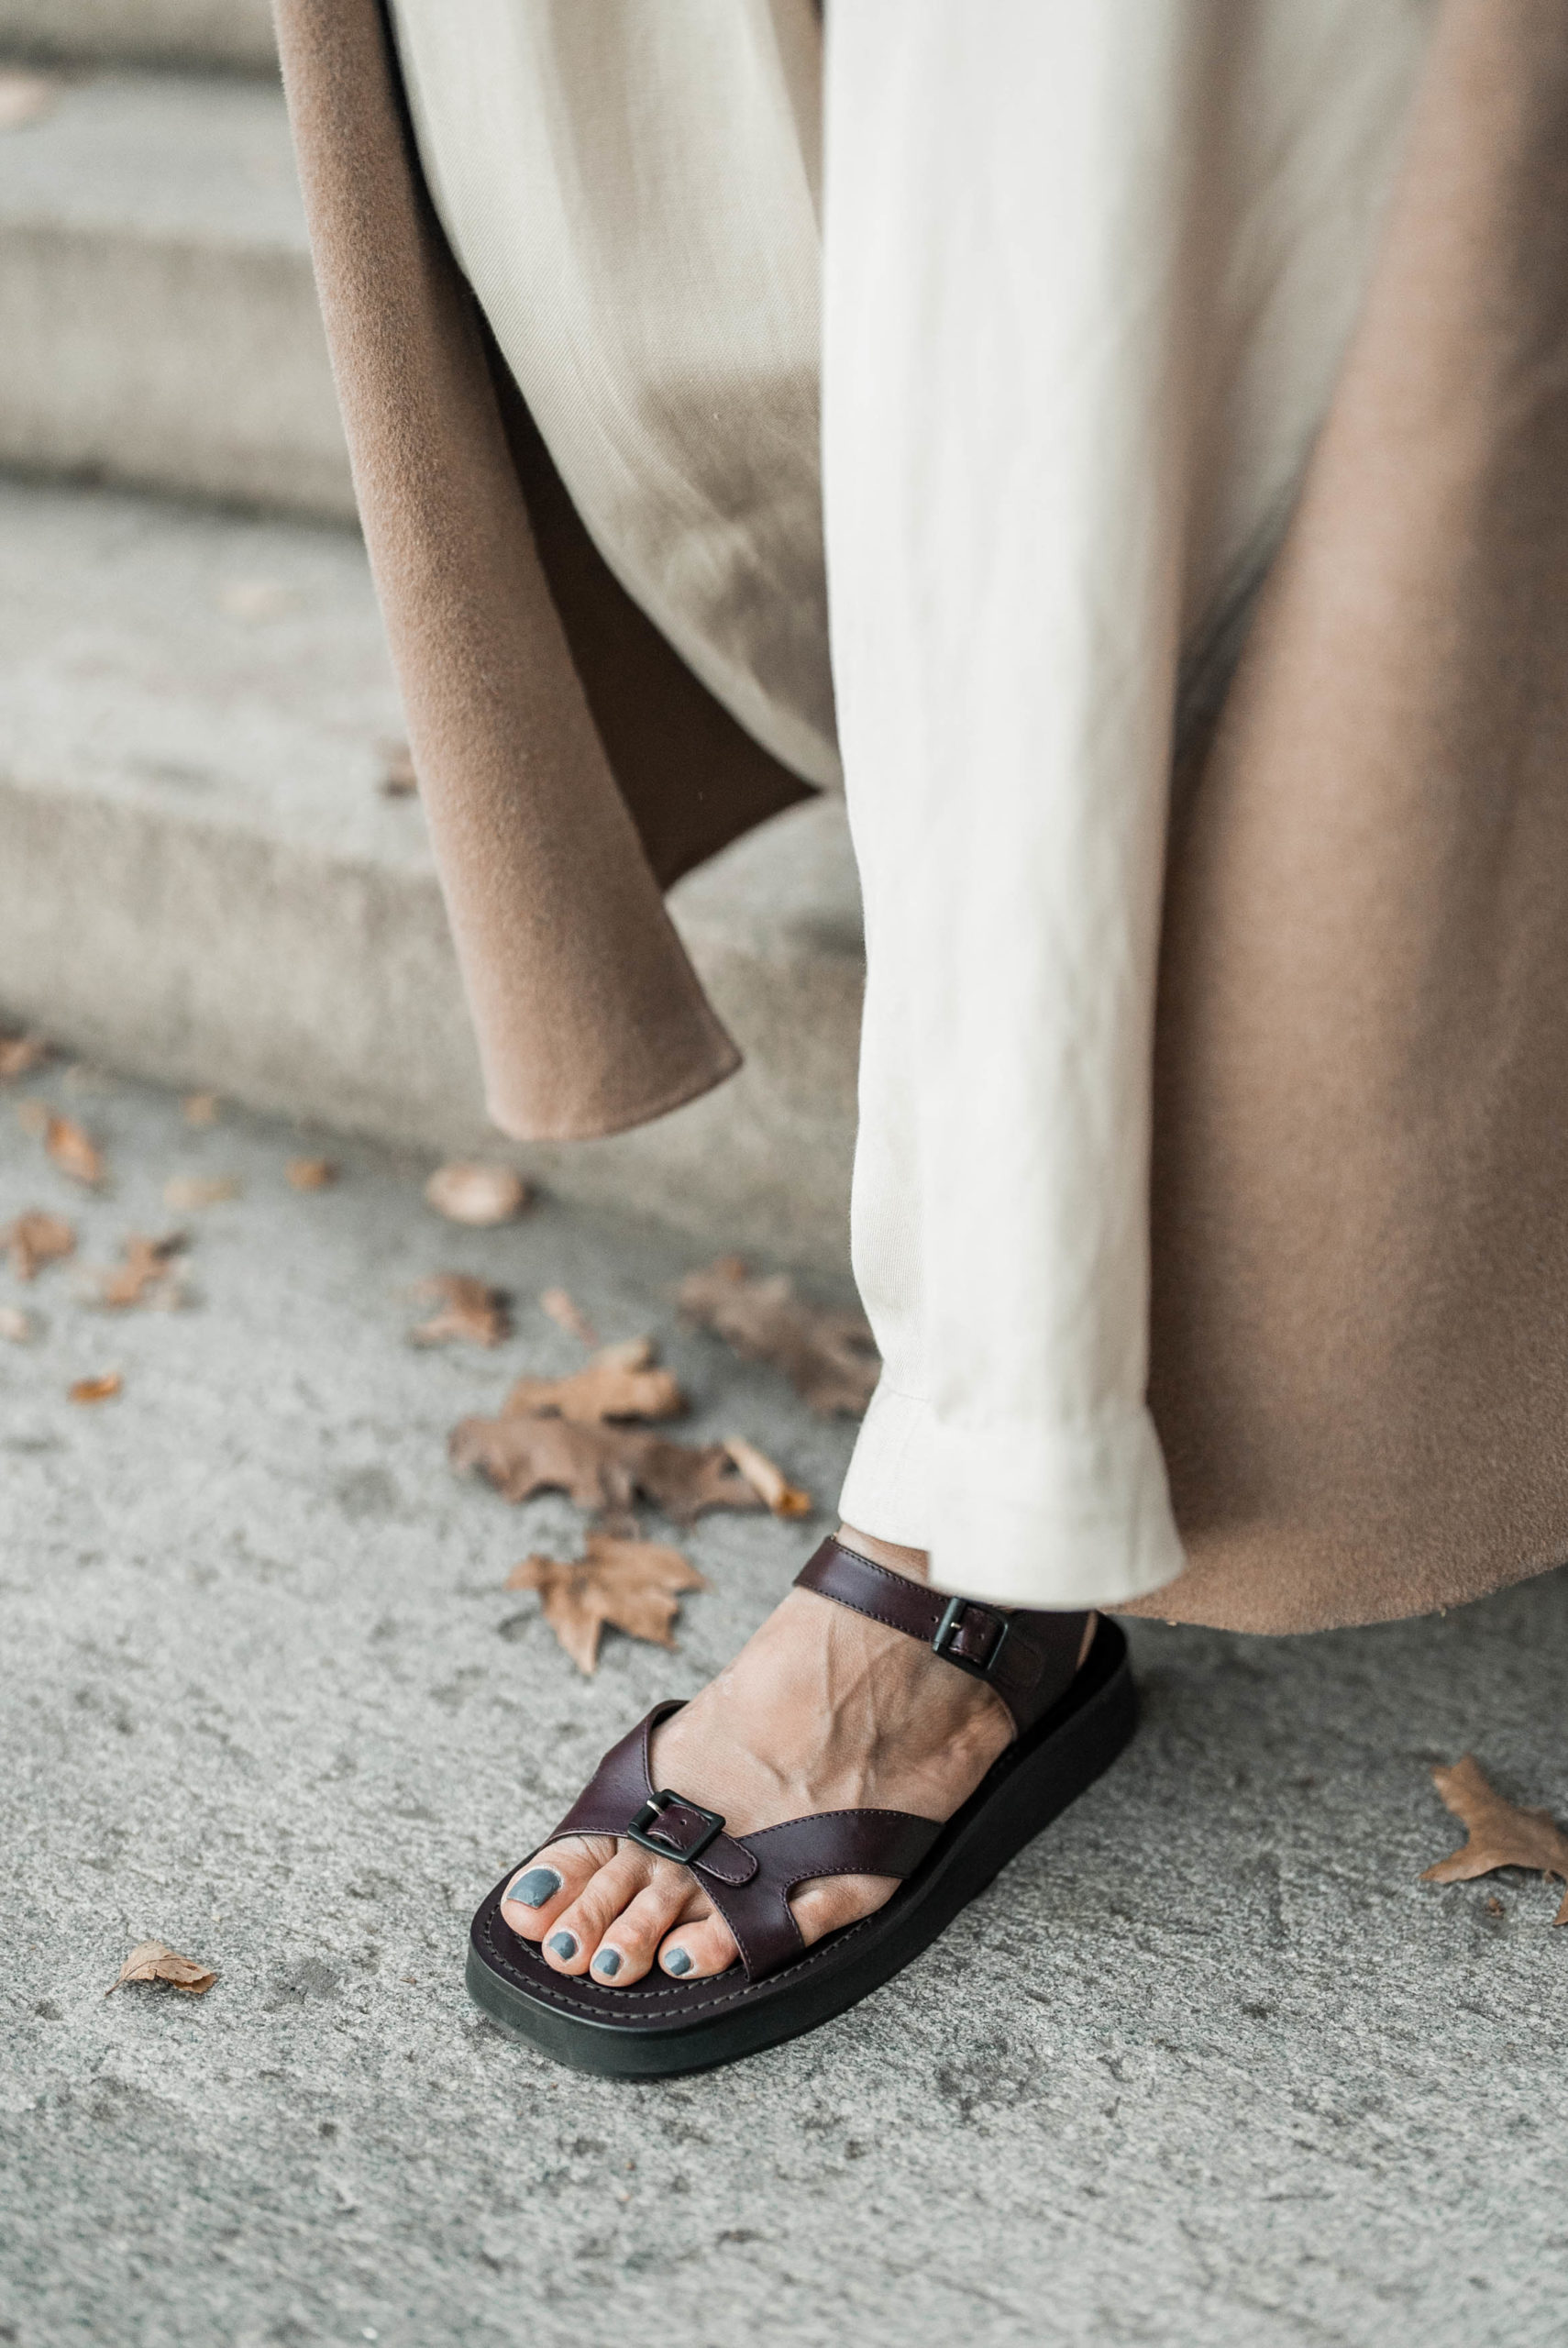 Style-Senses_An-Trieu_Central-Park-the row geri sandals COS wool coat trousers